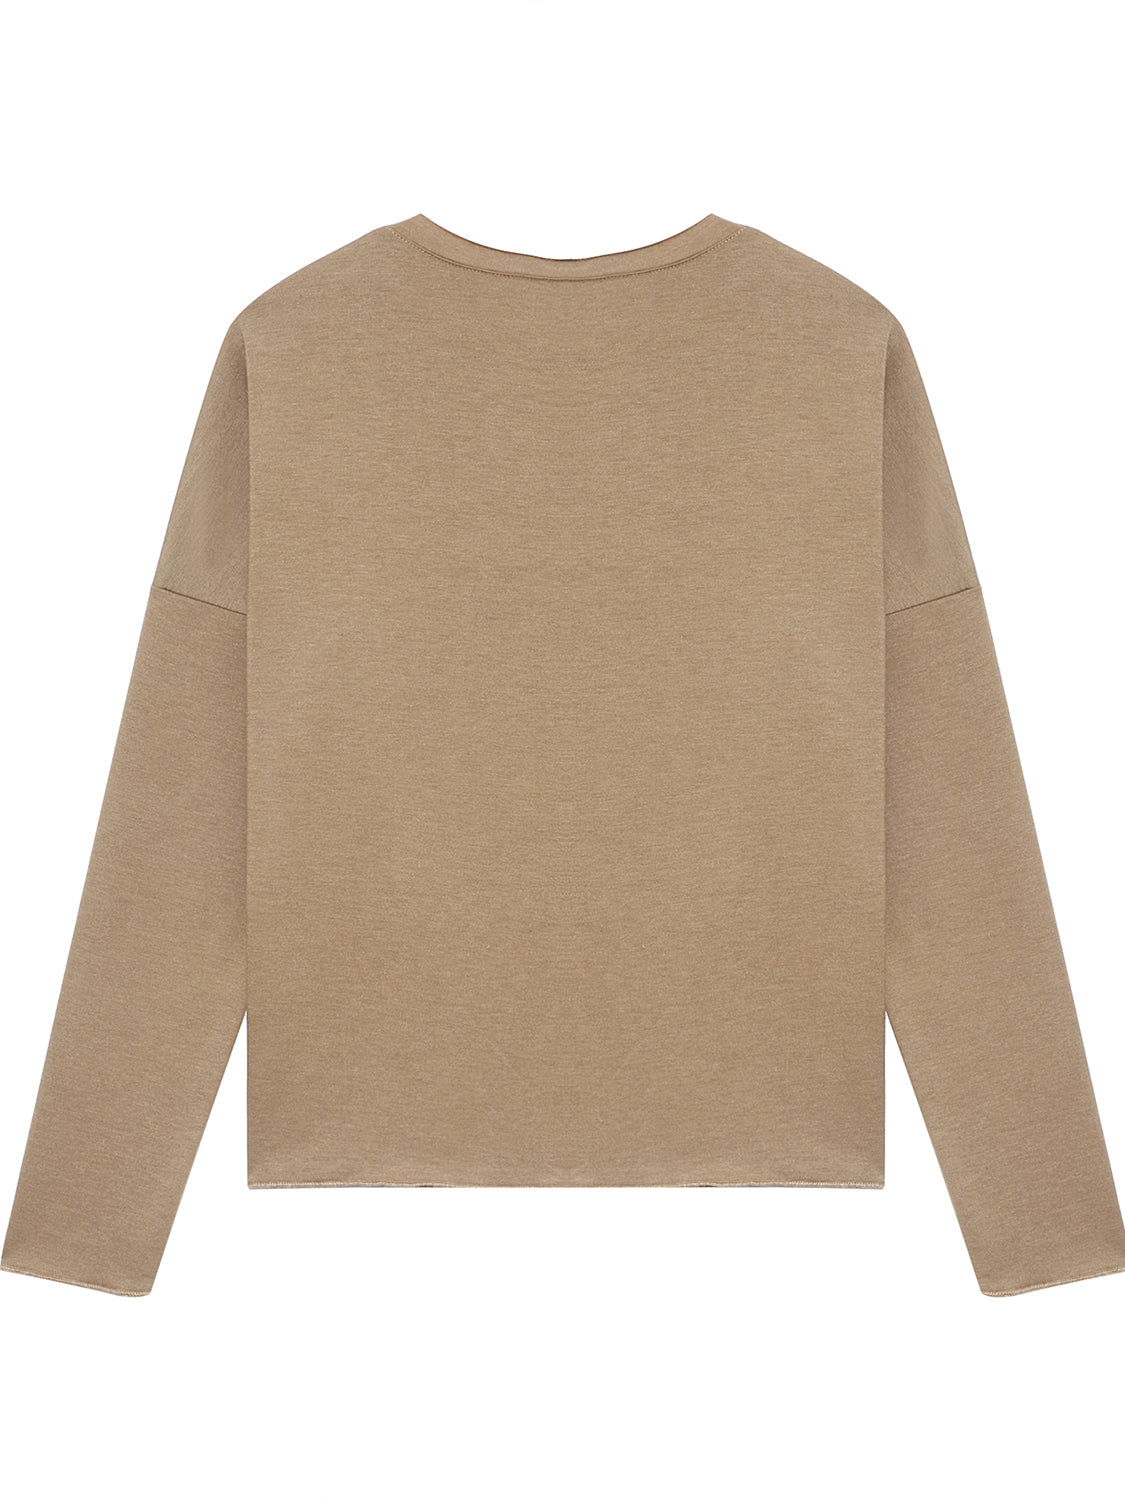 Full Size Round Neck Long Sleeve ZERO AMUCKS GIVEN Graphic Sweatshirt free shipping -Oh Em Gee Boutique